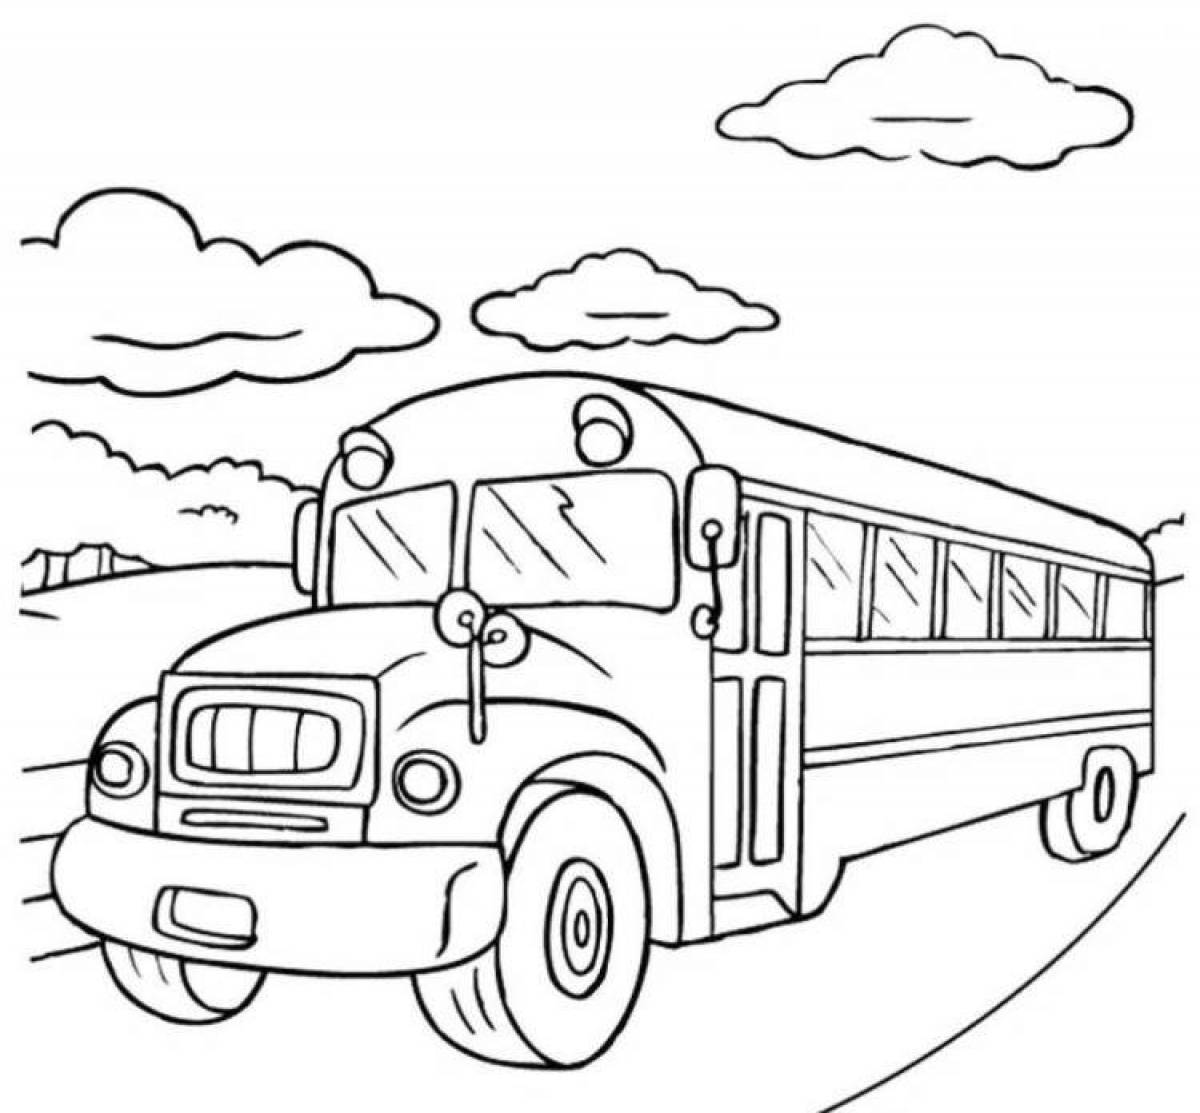 School bus #3